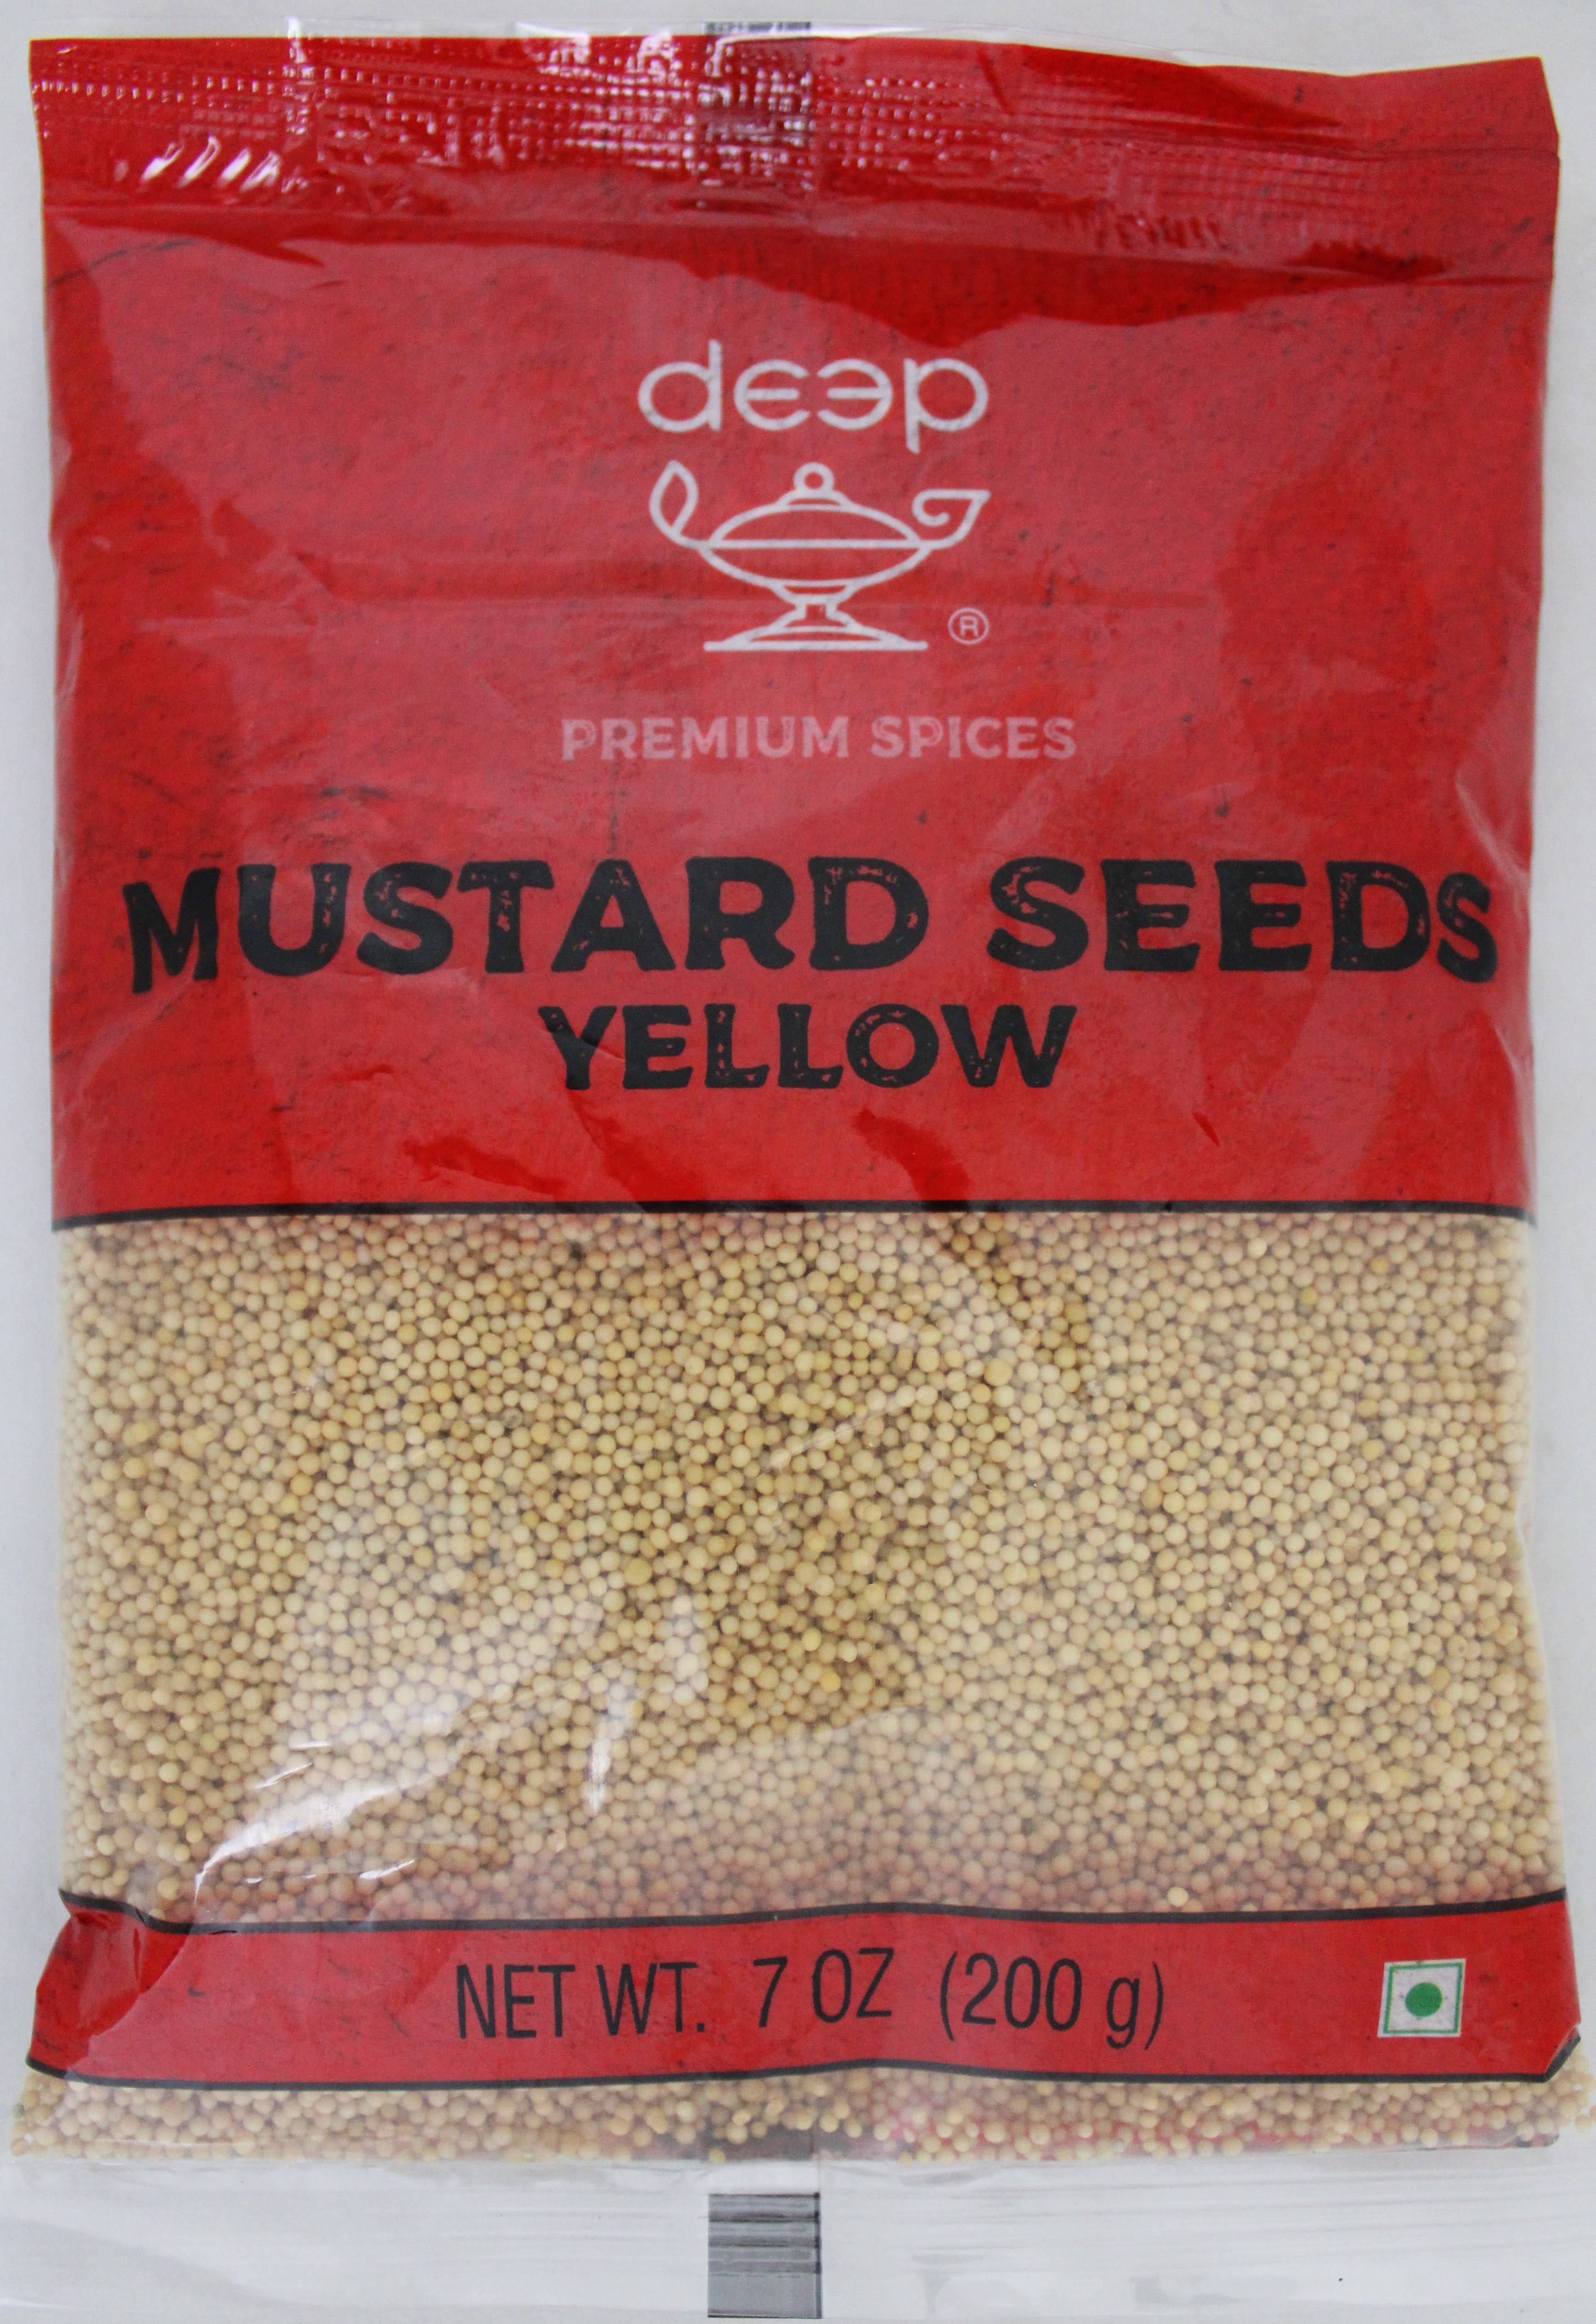 Deep Mustard Seeds - Yellow, 7 oz Bag